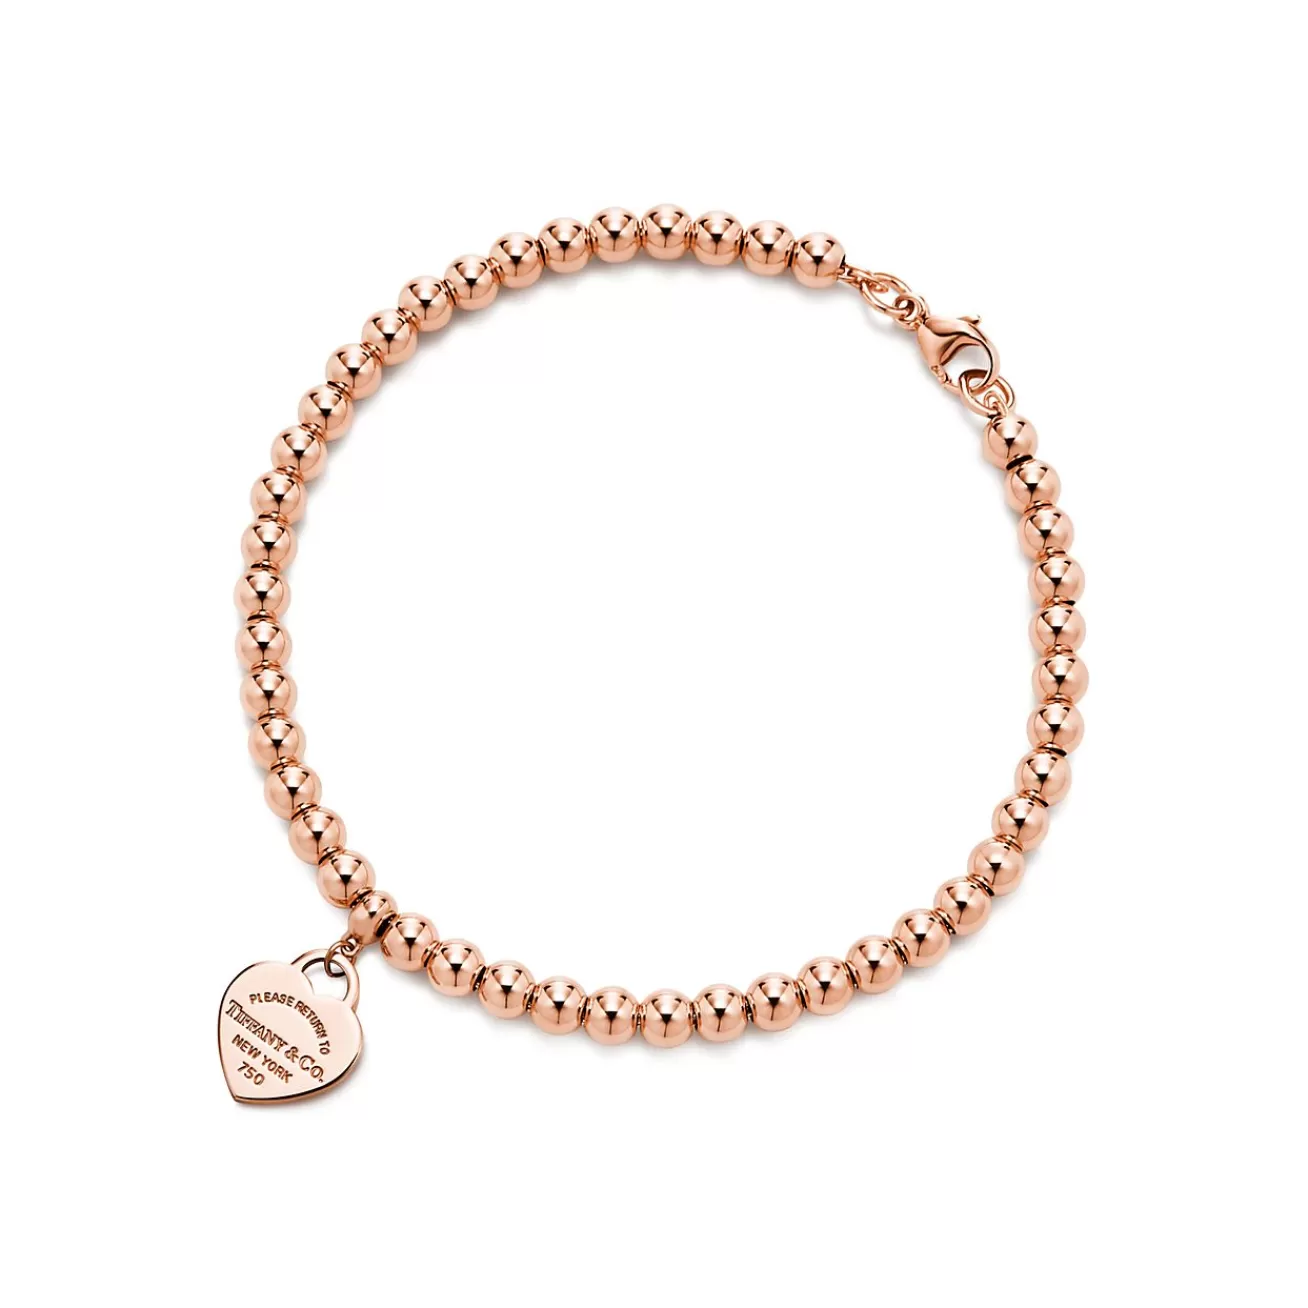 Tiffany & Co. Return to Tiffany® Heart Tag Bead Bracelet in Rose Gold, 4 mm | ^ Bracelets | Rose Gold Jewelry